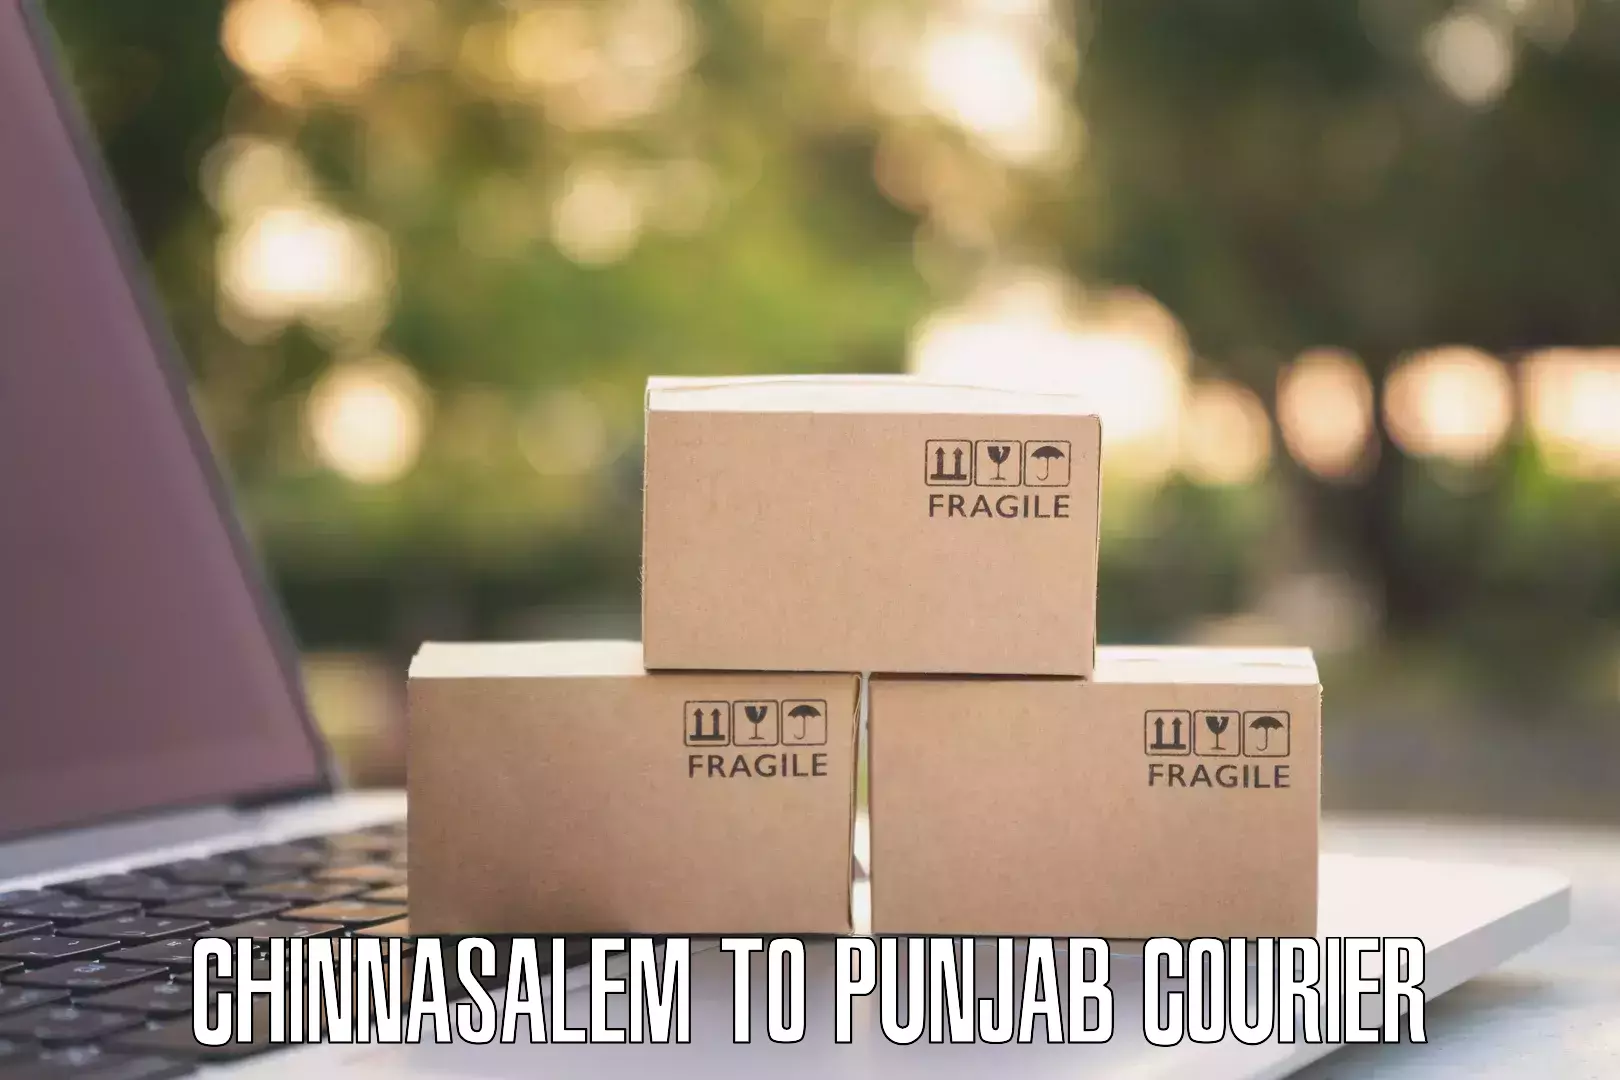 Premium courier services in Chinnasalem to Punjab